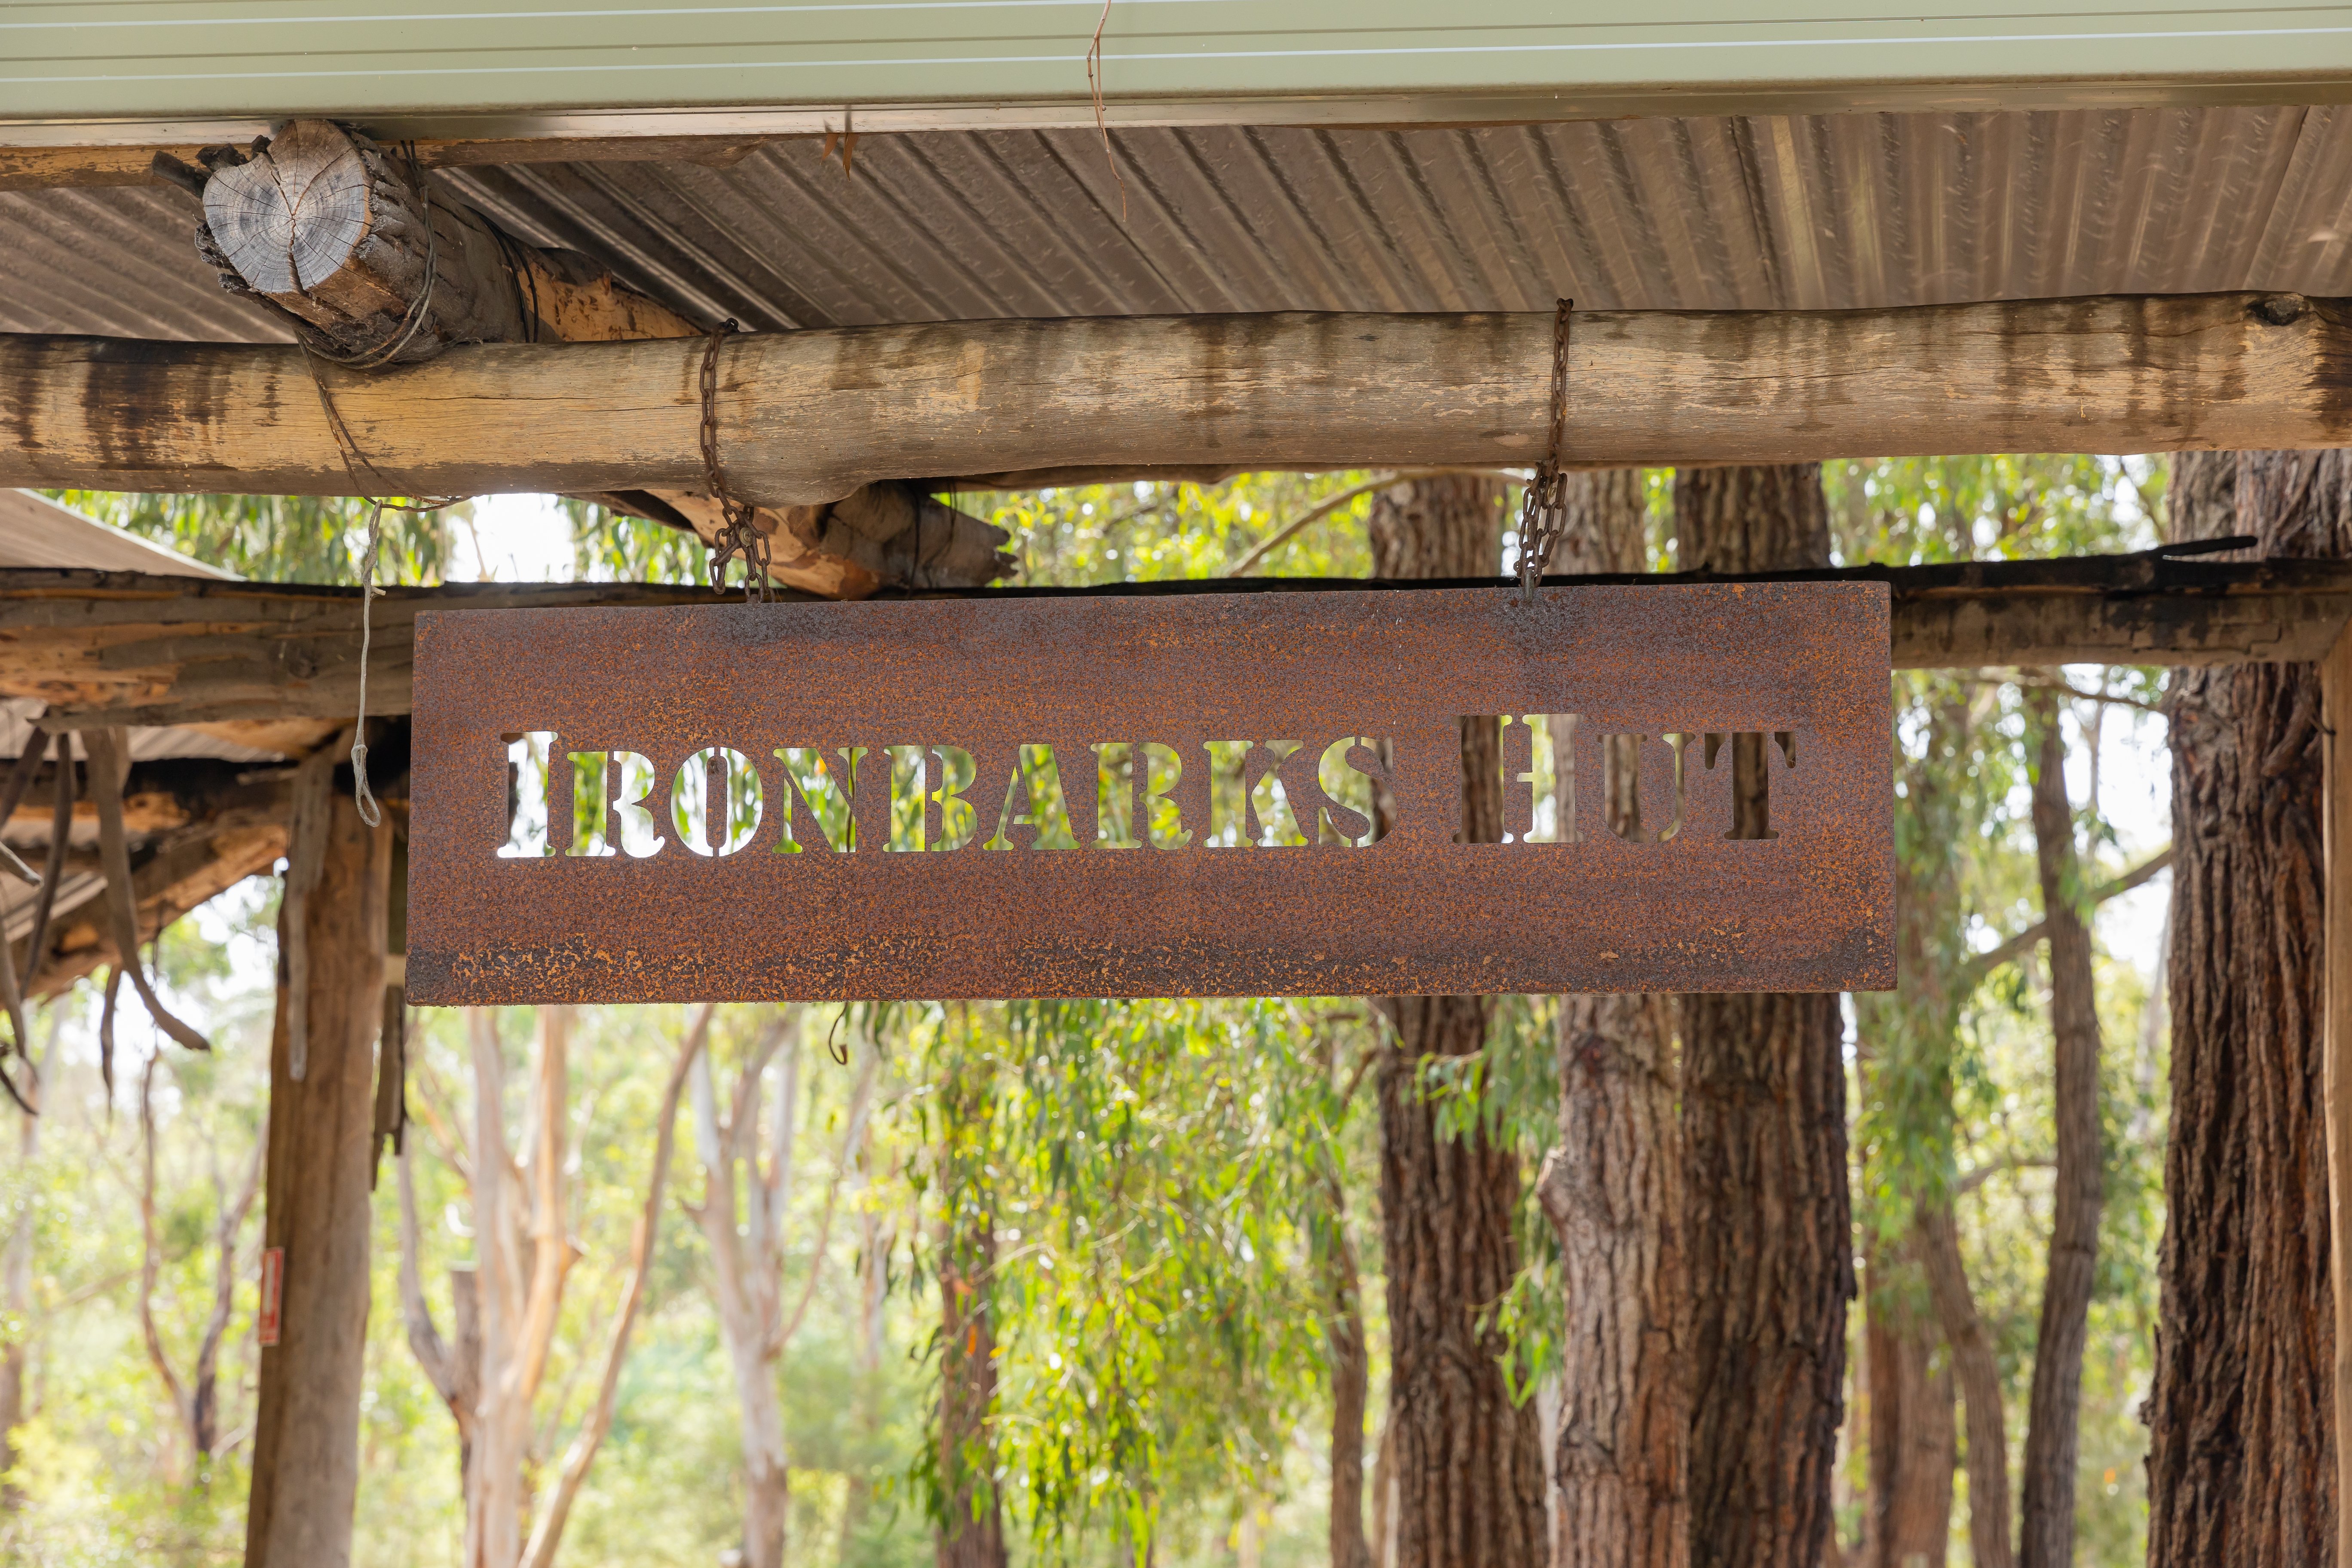 Ironbarks Hut